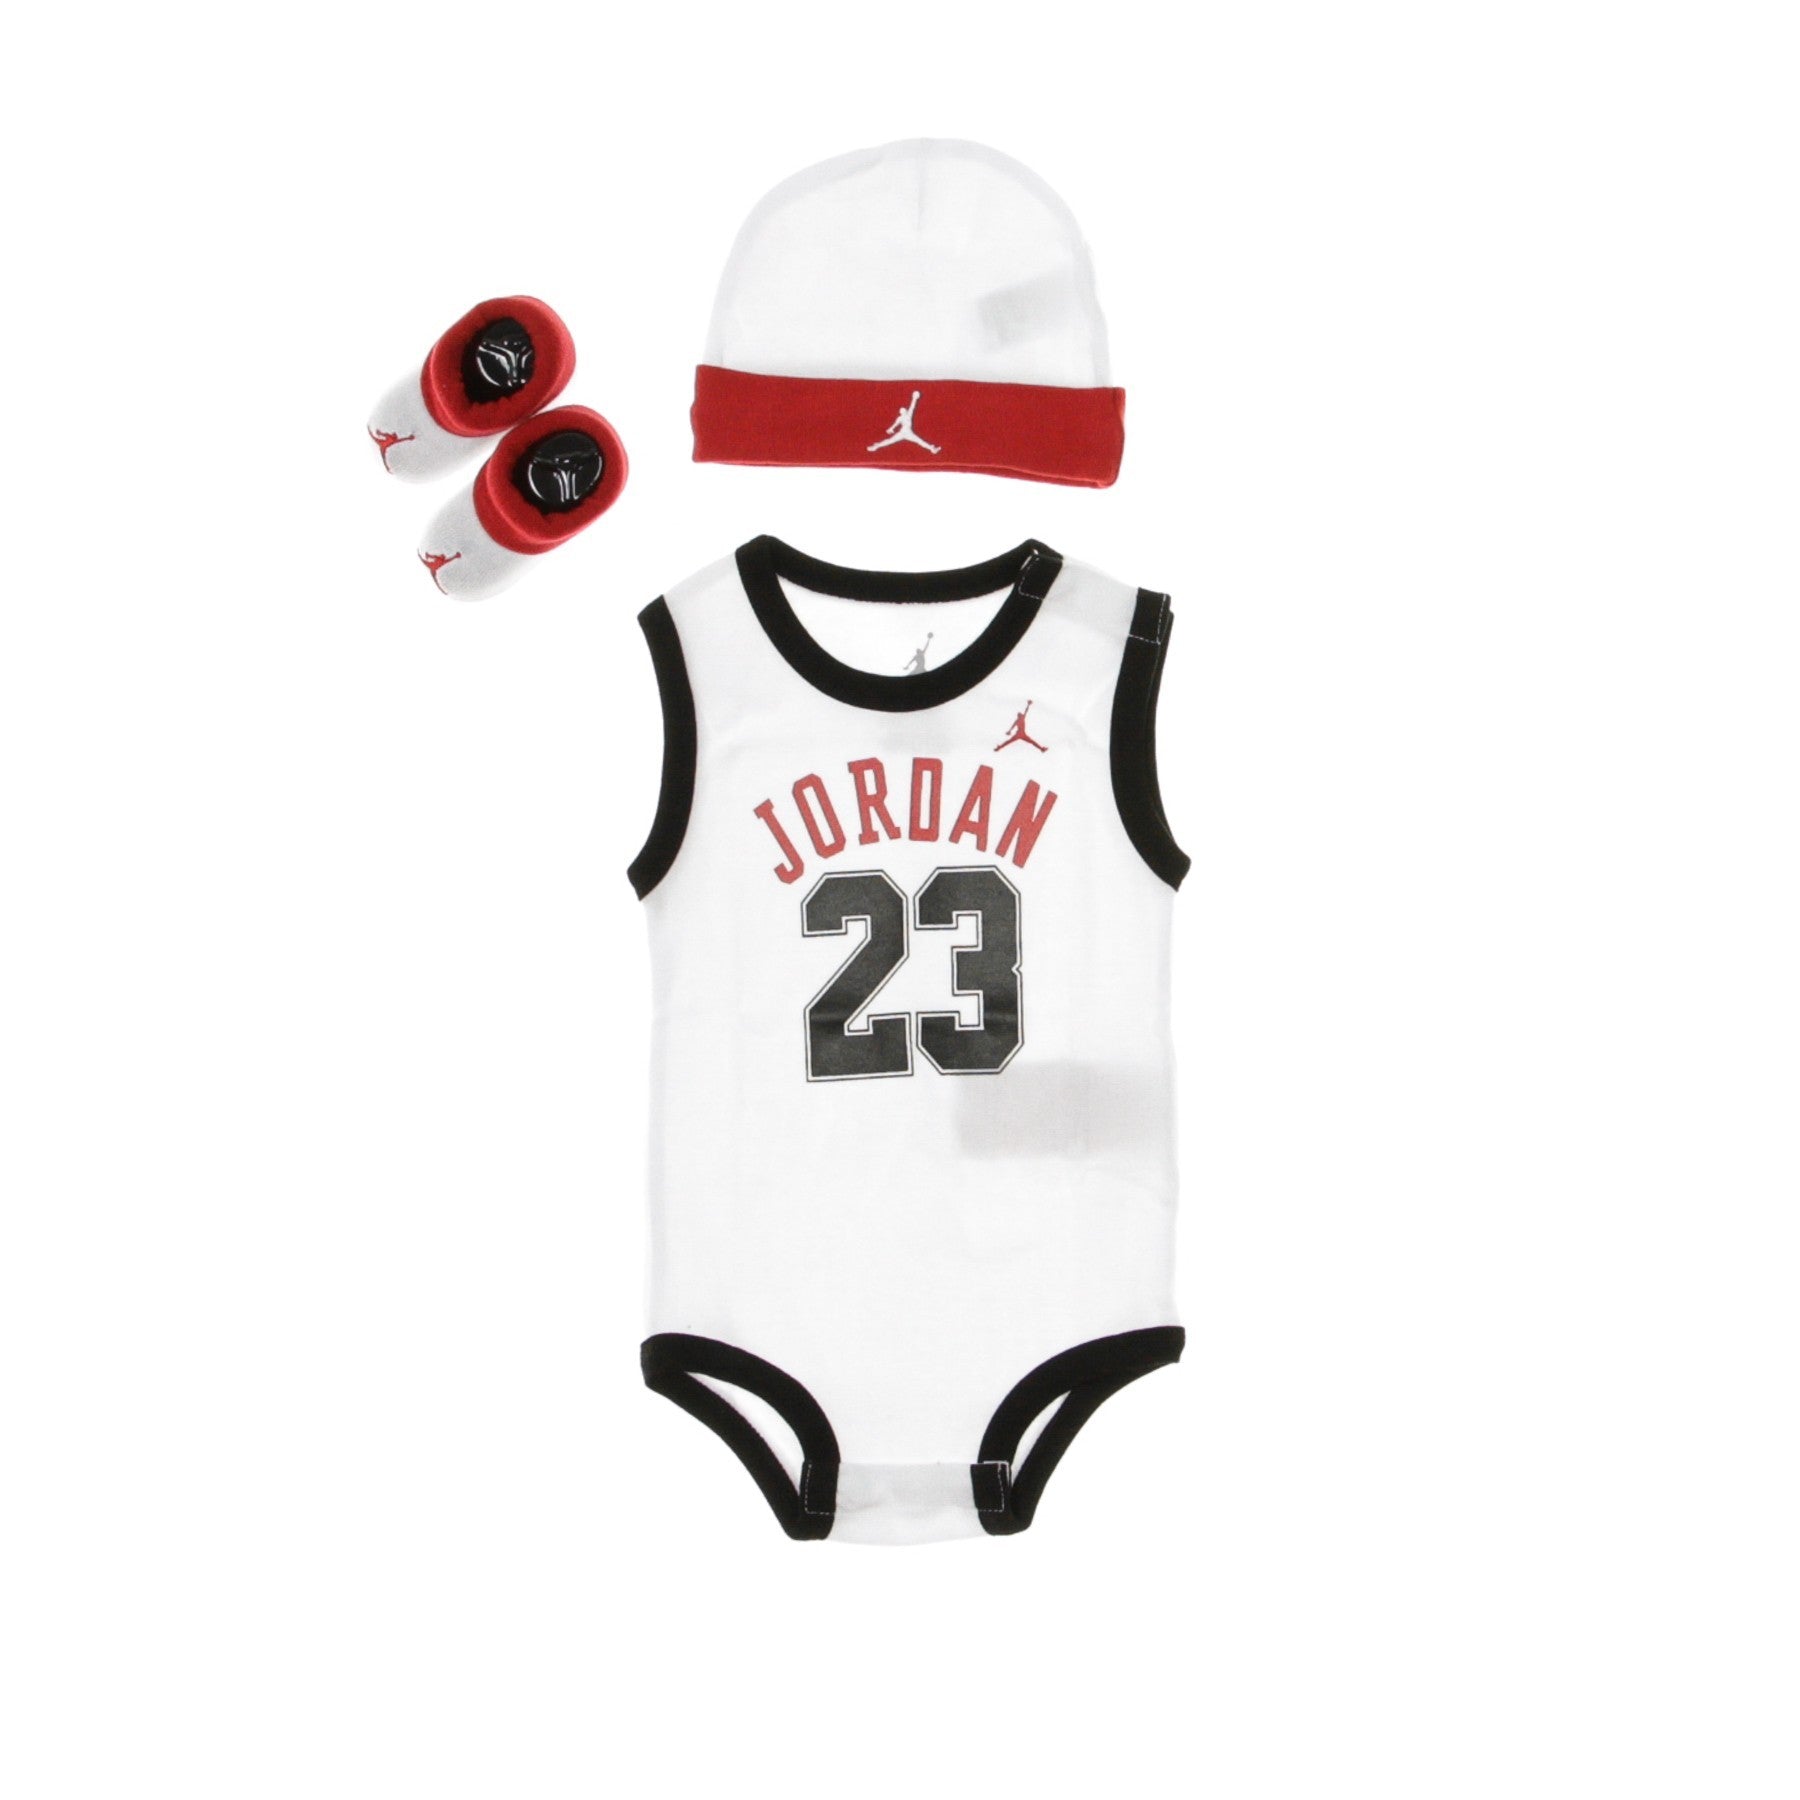 Baby Bodysuit+hat+socks Set Jordan 23 Jersey Bodysuit &amp;hat Set